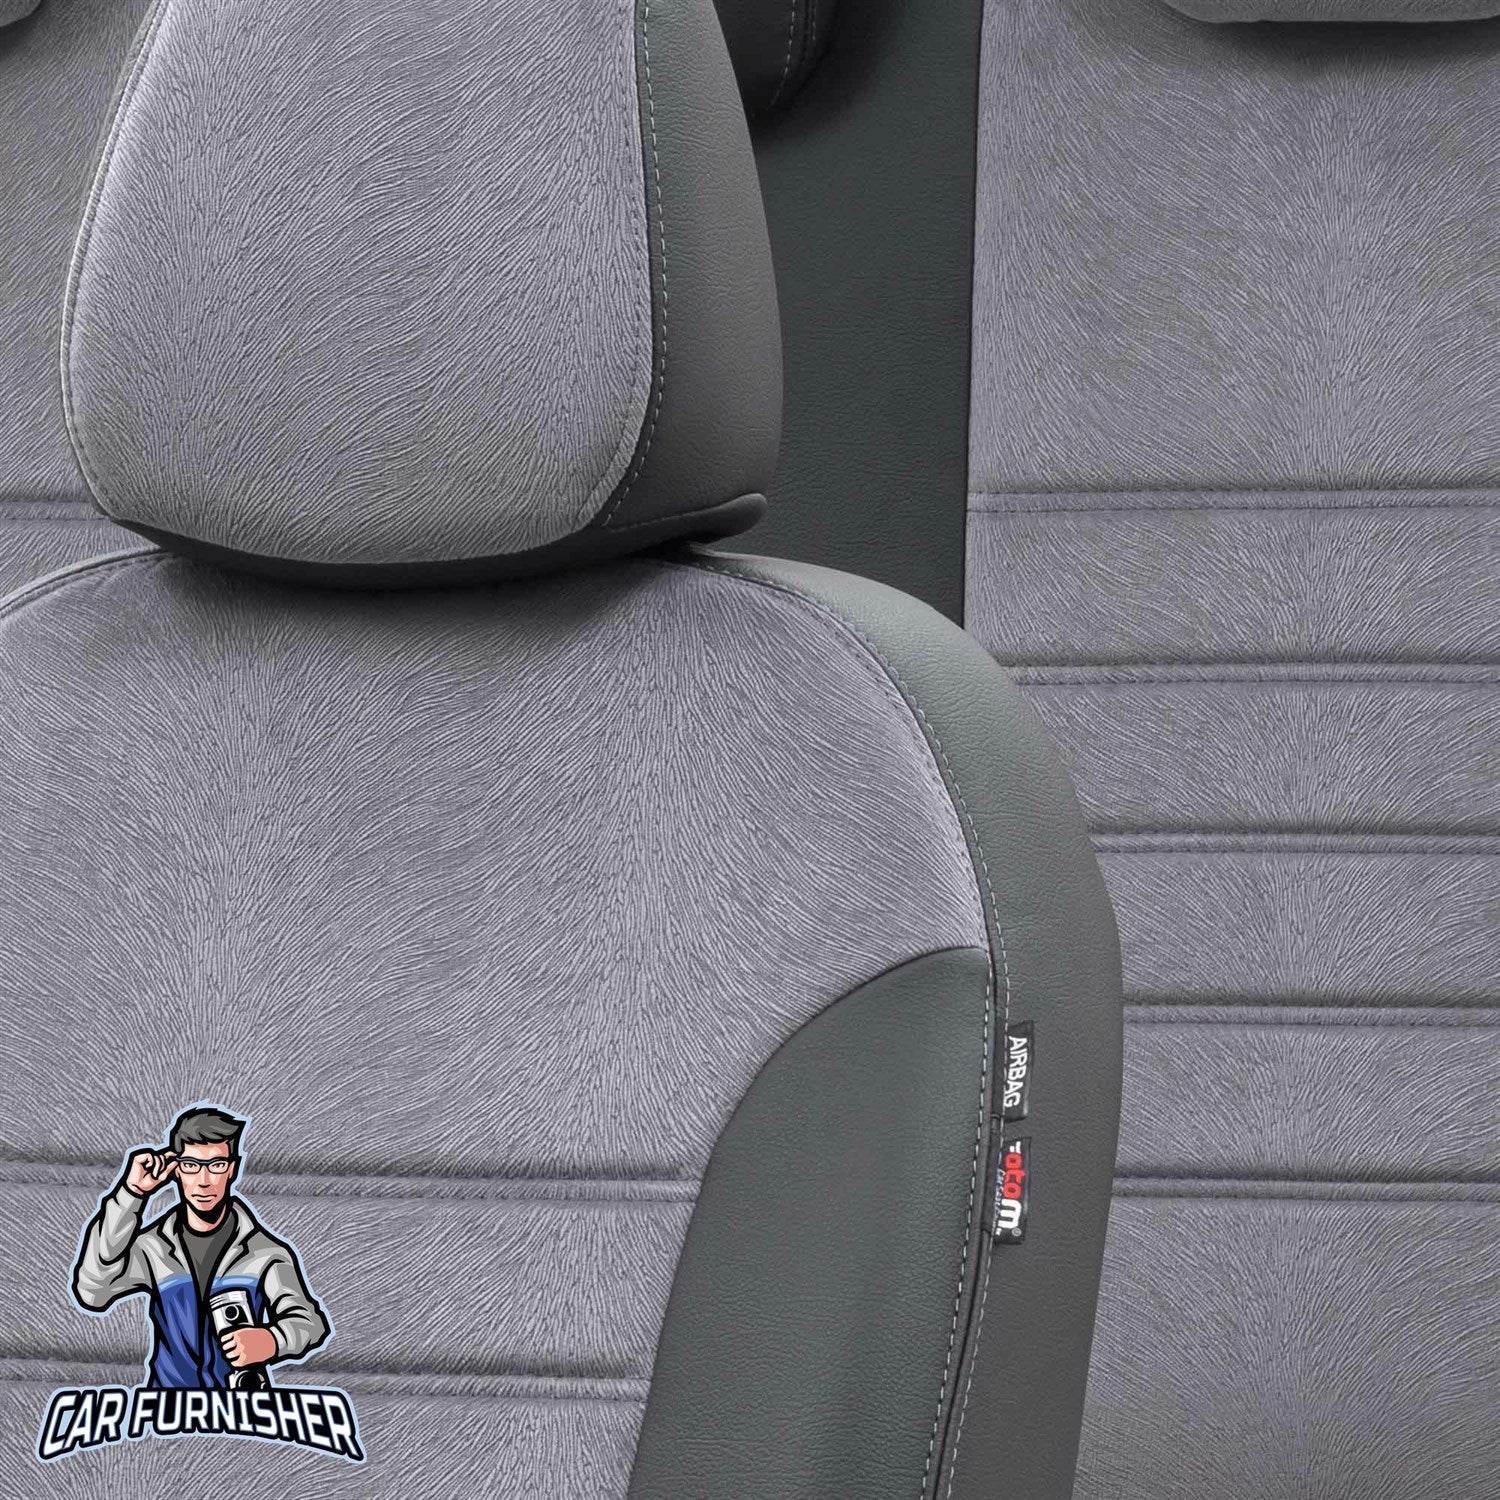 Kia Niro Seat Covers London Foal Feather Design Smoked Black Leather & Foal Feather